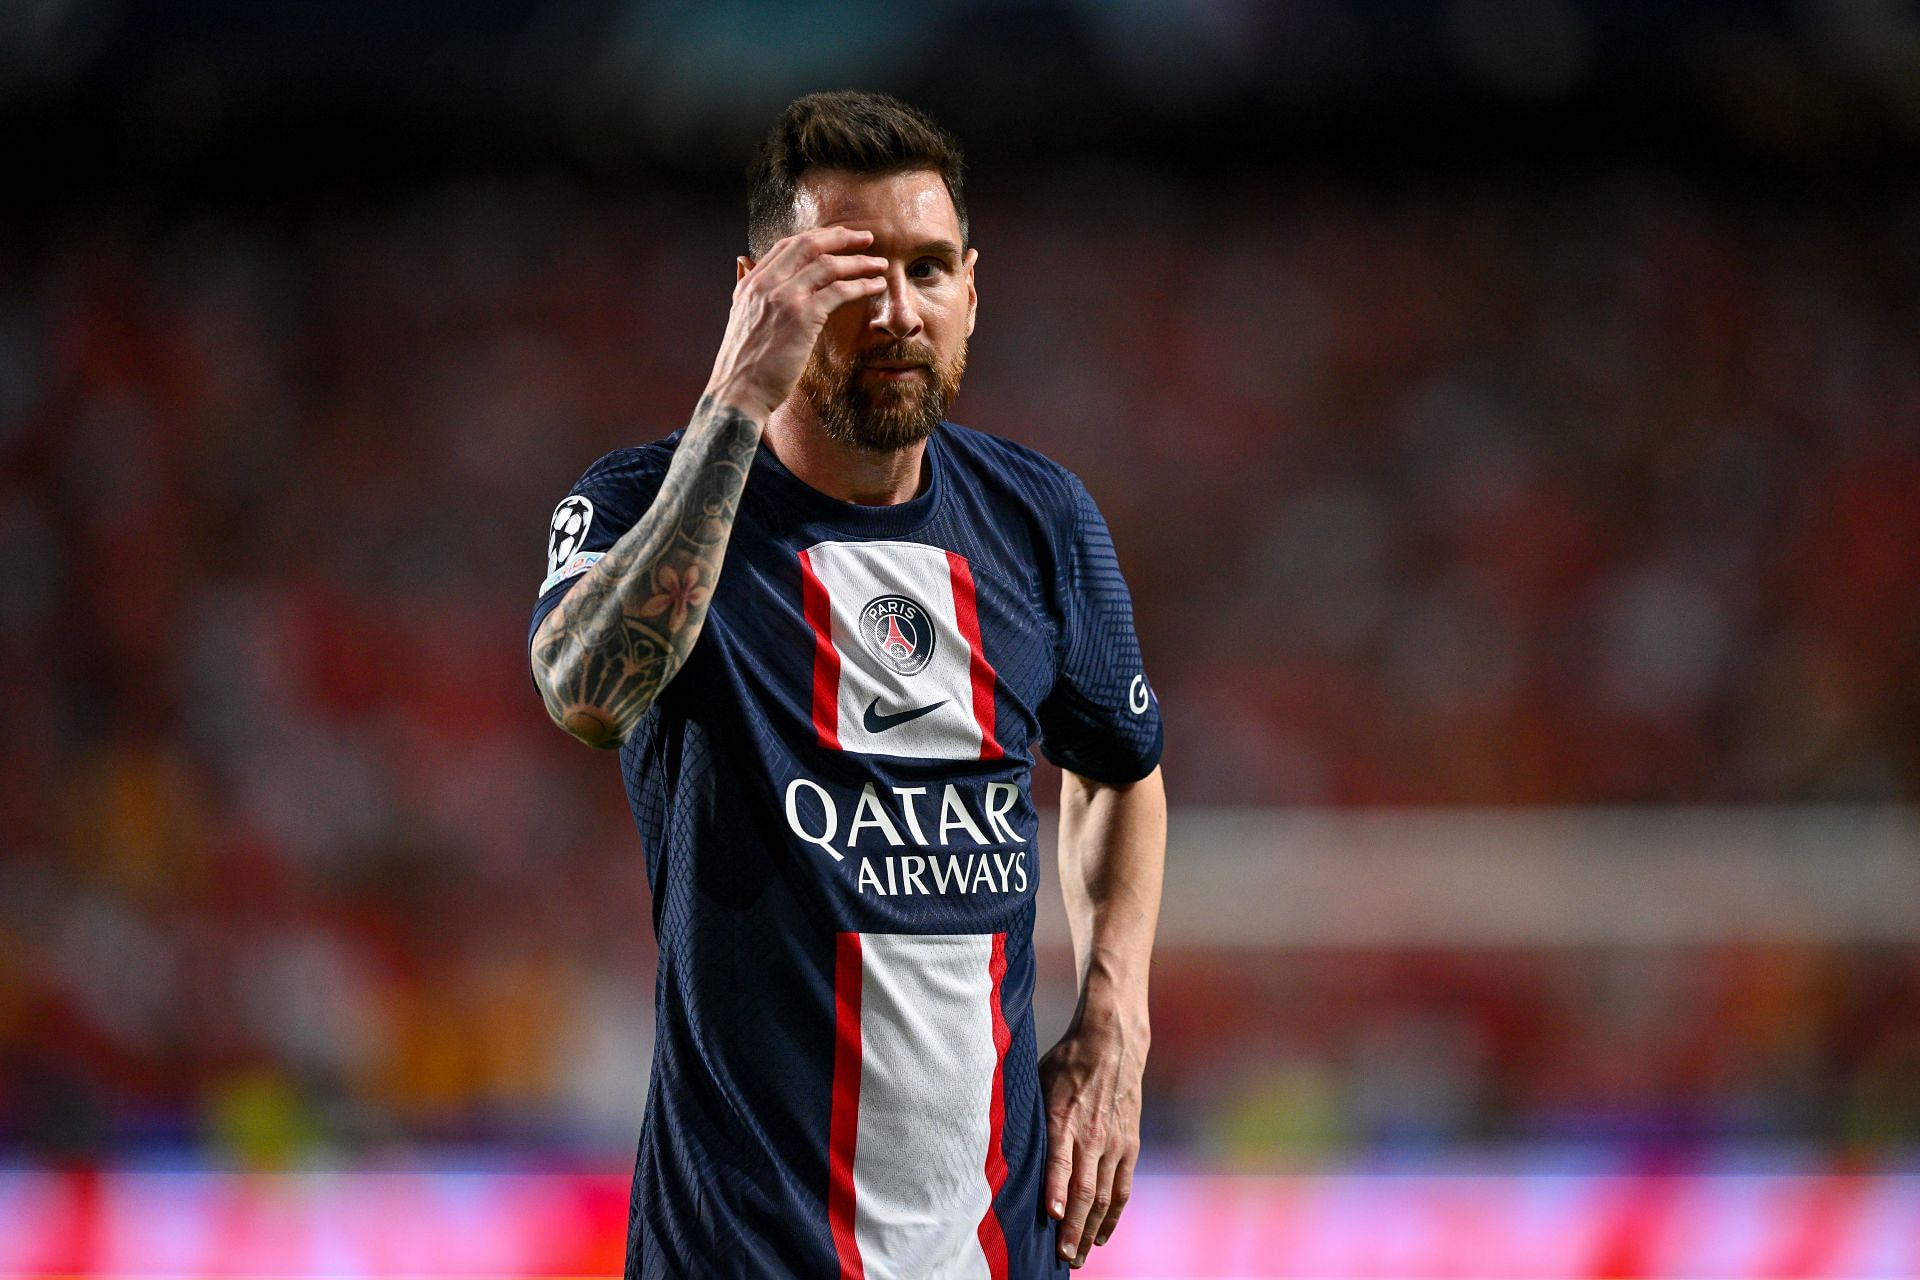 PSG superstar Lionel Messi